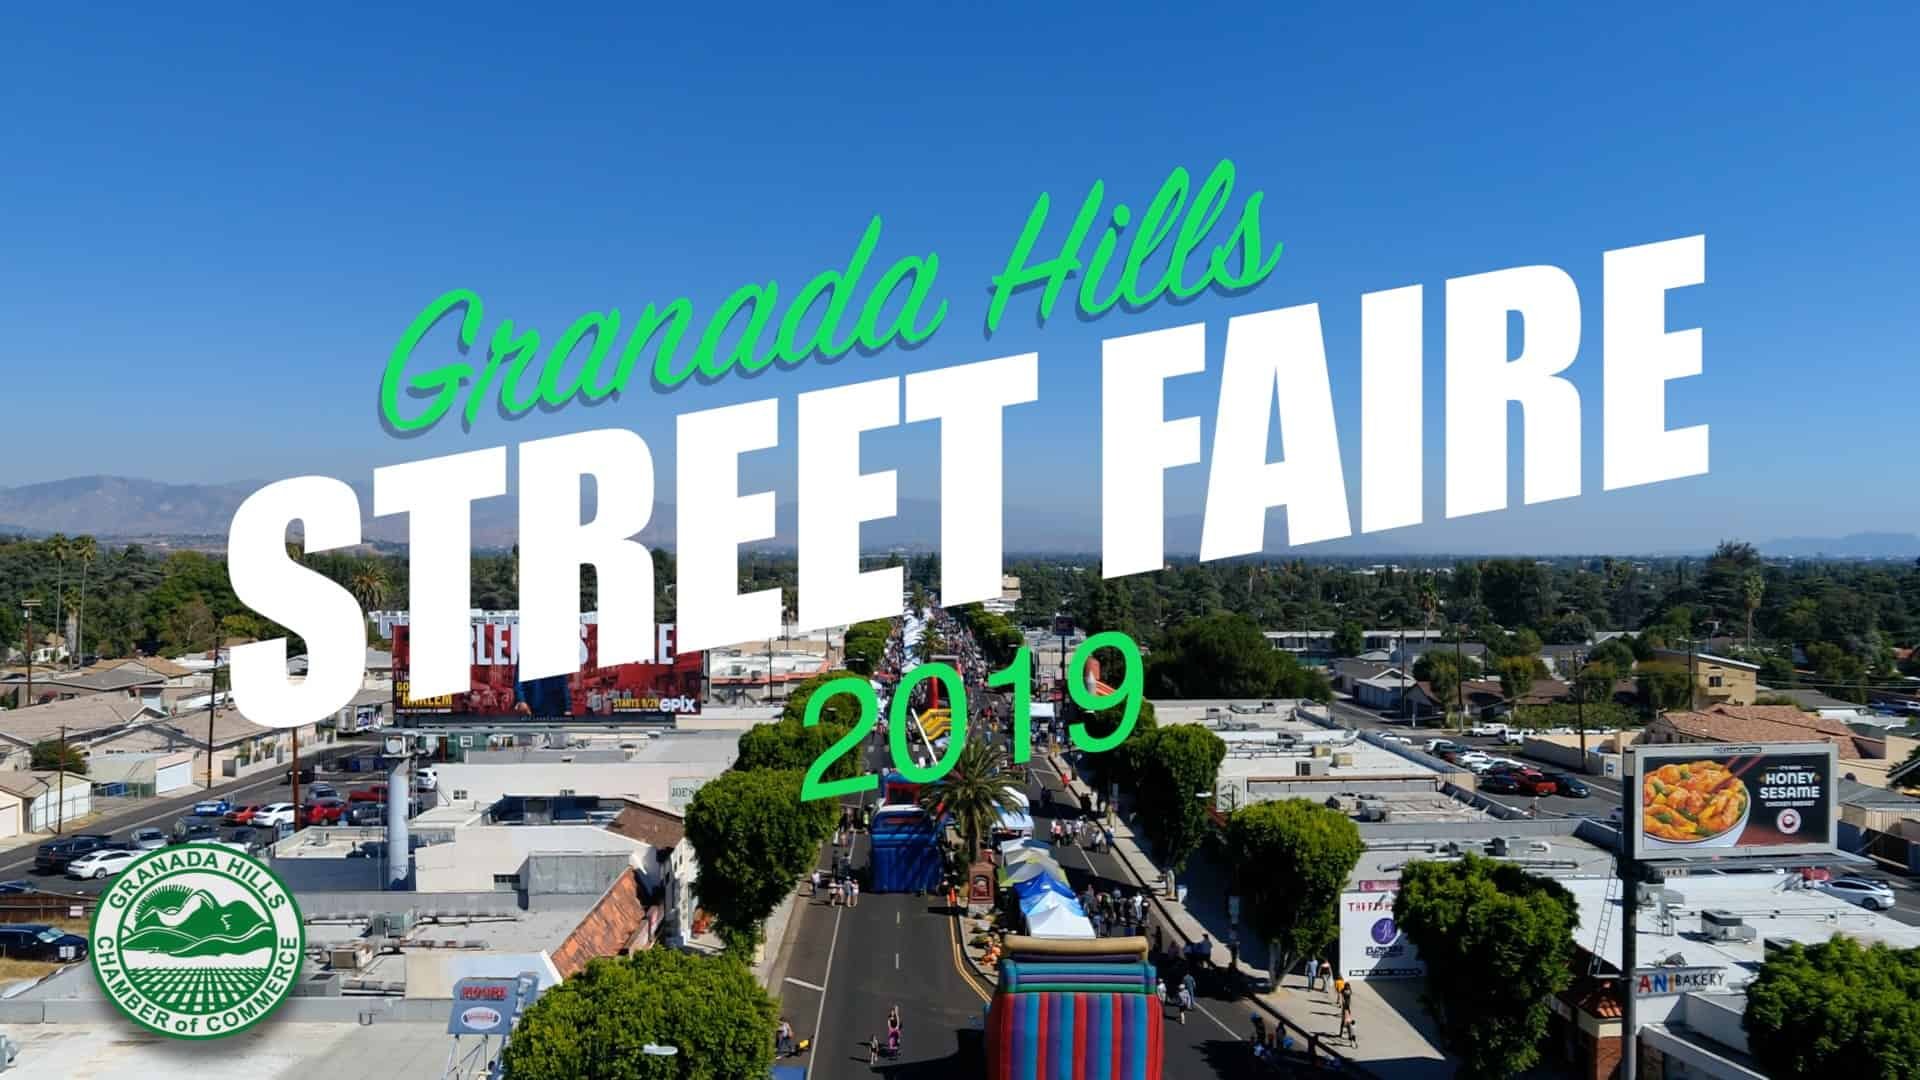 Granada Hills Street Faire Video – October 5, 2019